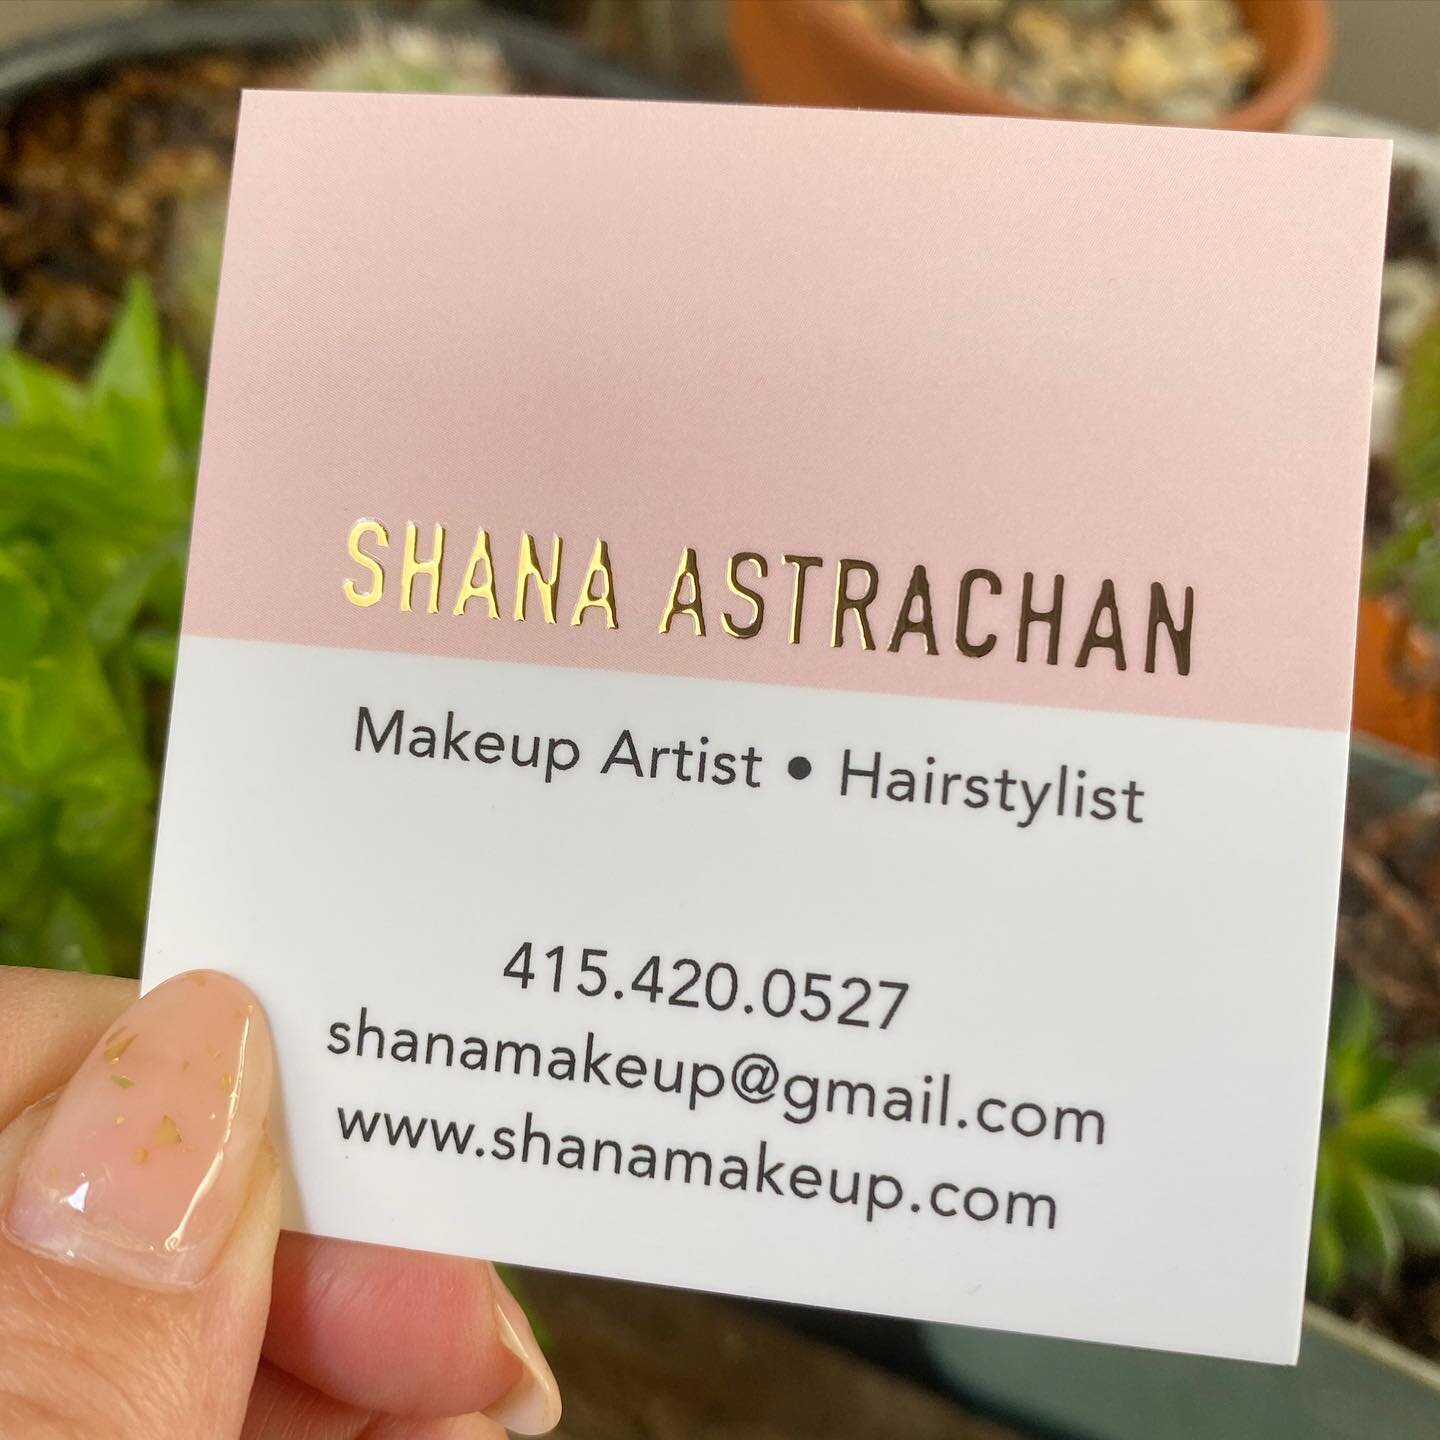 The reverse side of my new business card I designed for myself ✨

All my info:
Shana Astrachan
shanamakeup@gmail.com
‪415.420.0527‬
www.shanamakeup.com

#makeupartist #makeupandhair #bayareamakeupartist #bayareamakeupandhair #goldfoil